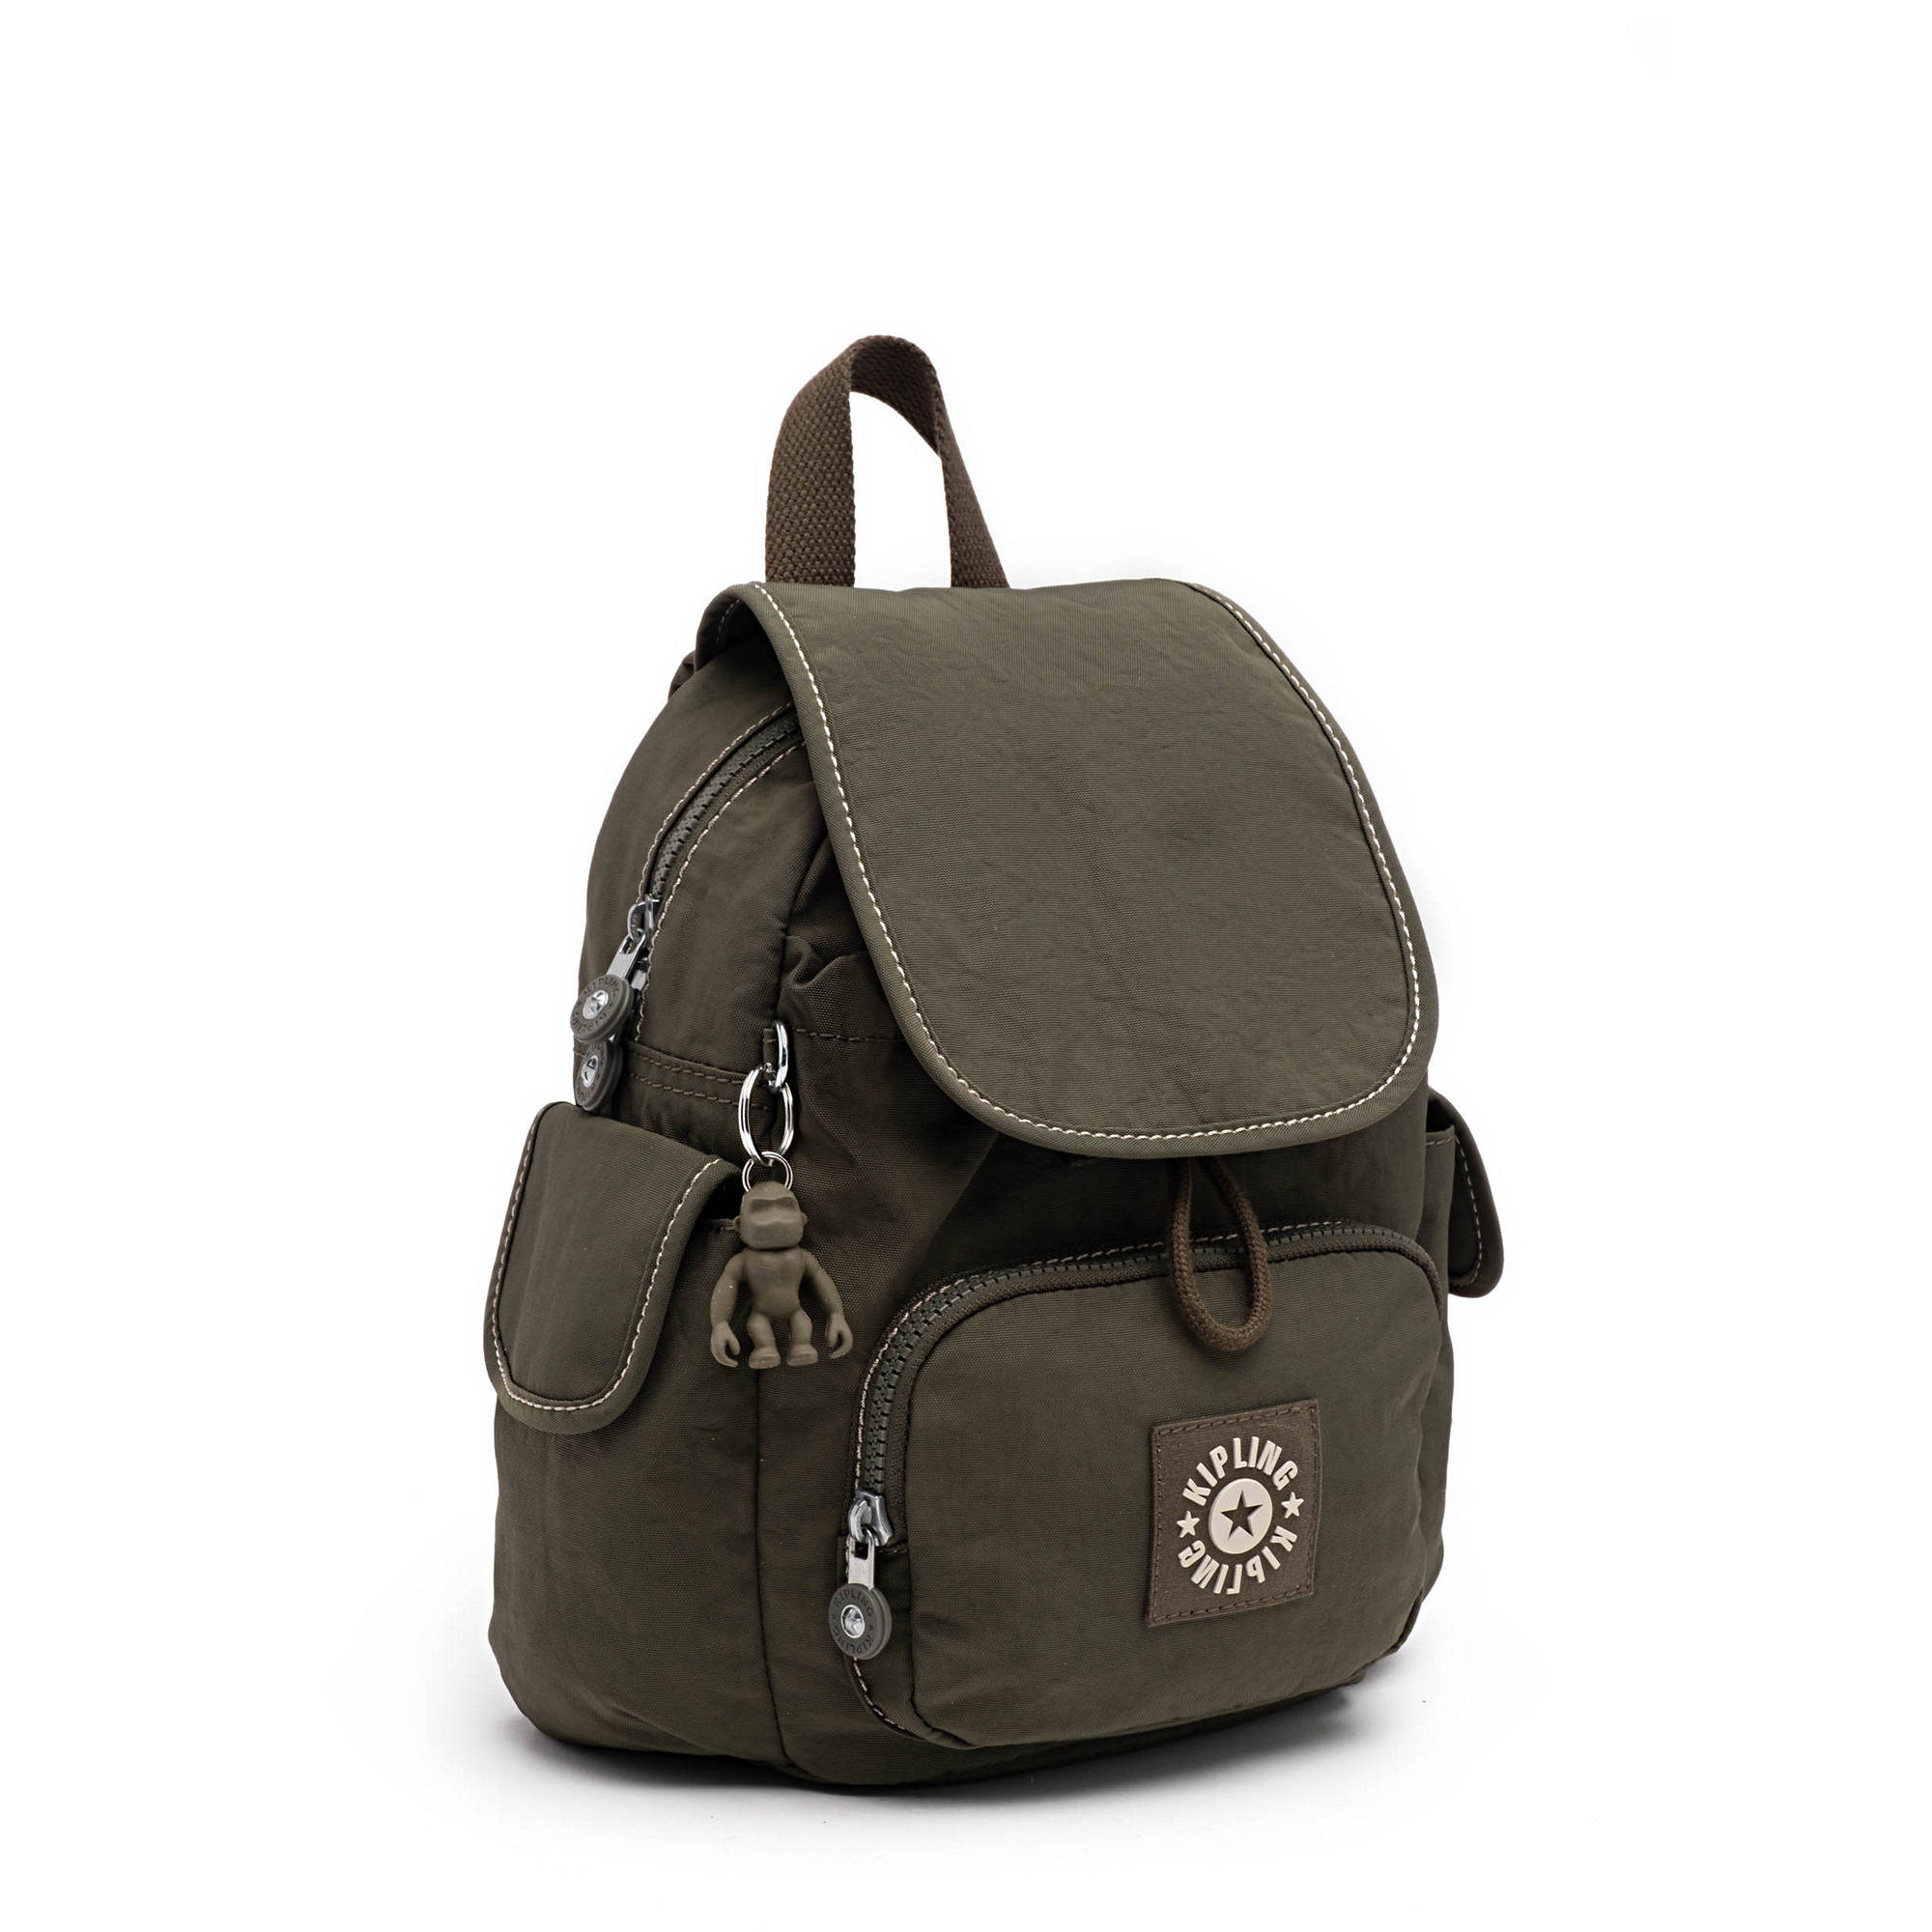 Kipling City Pack Extra Small Printed Backpack | eBay